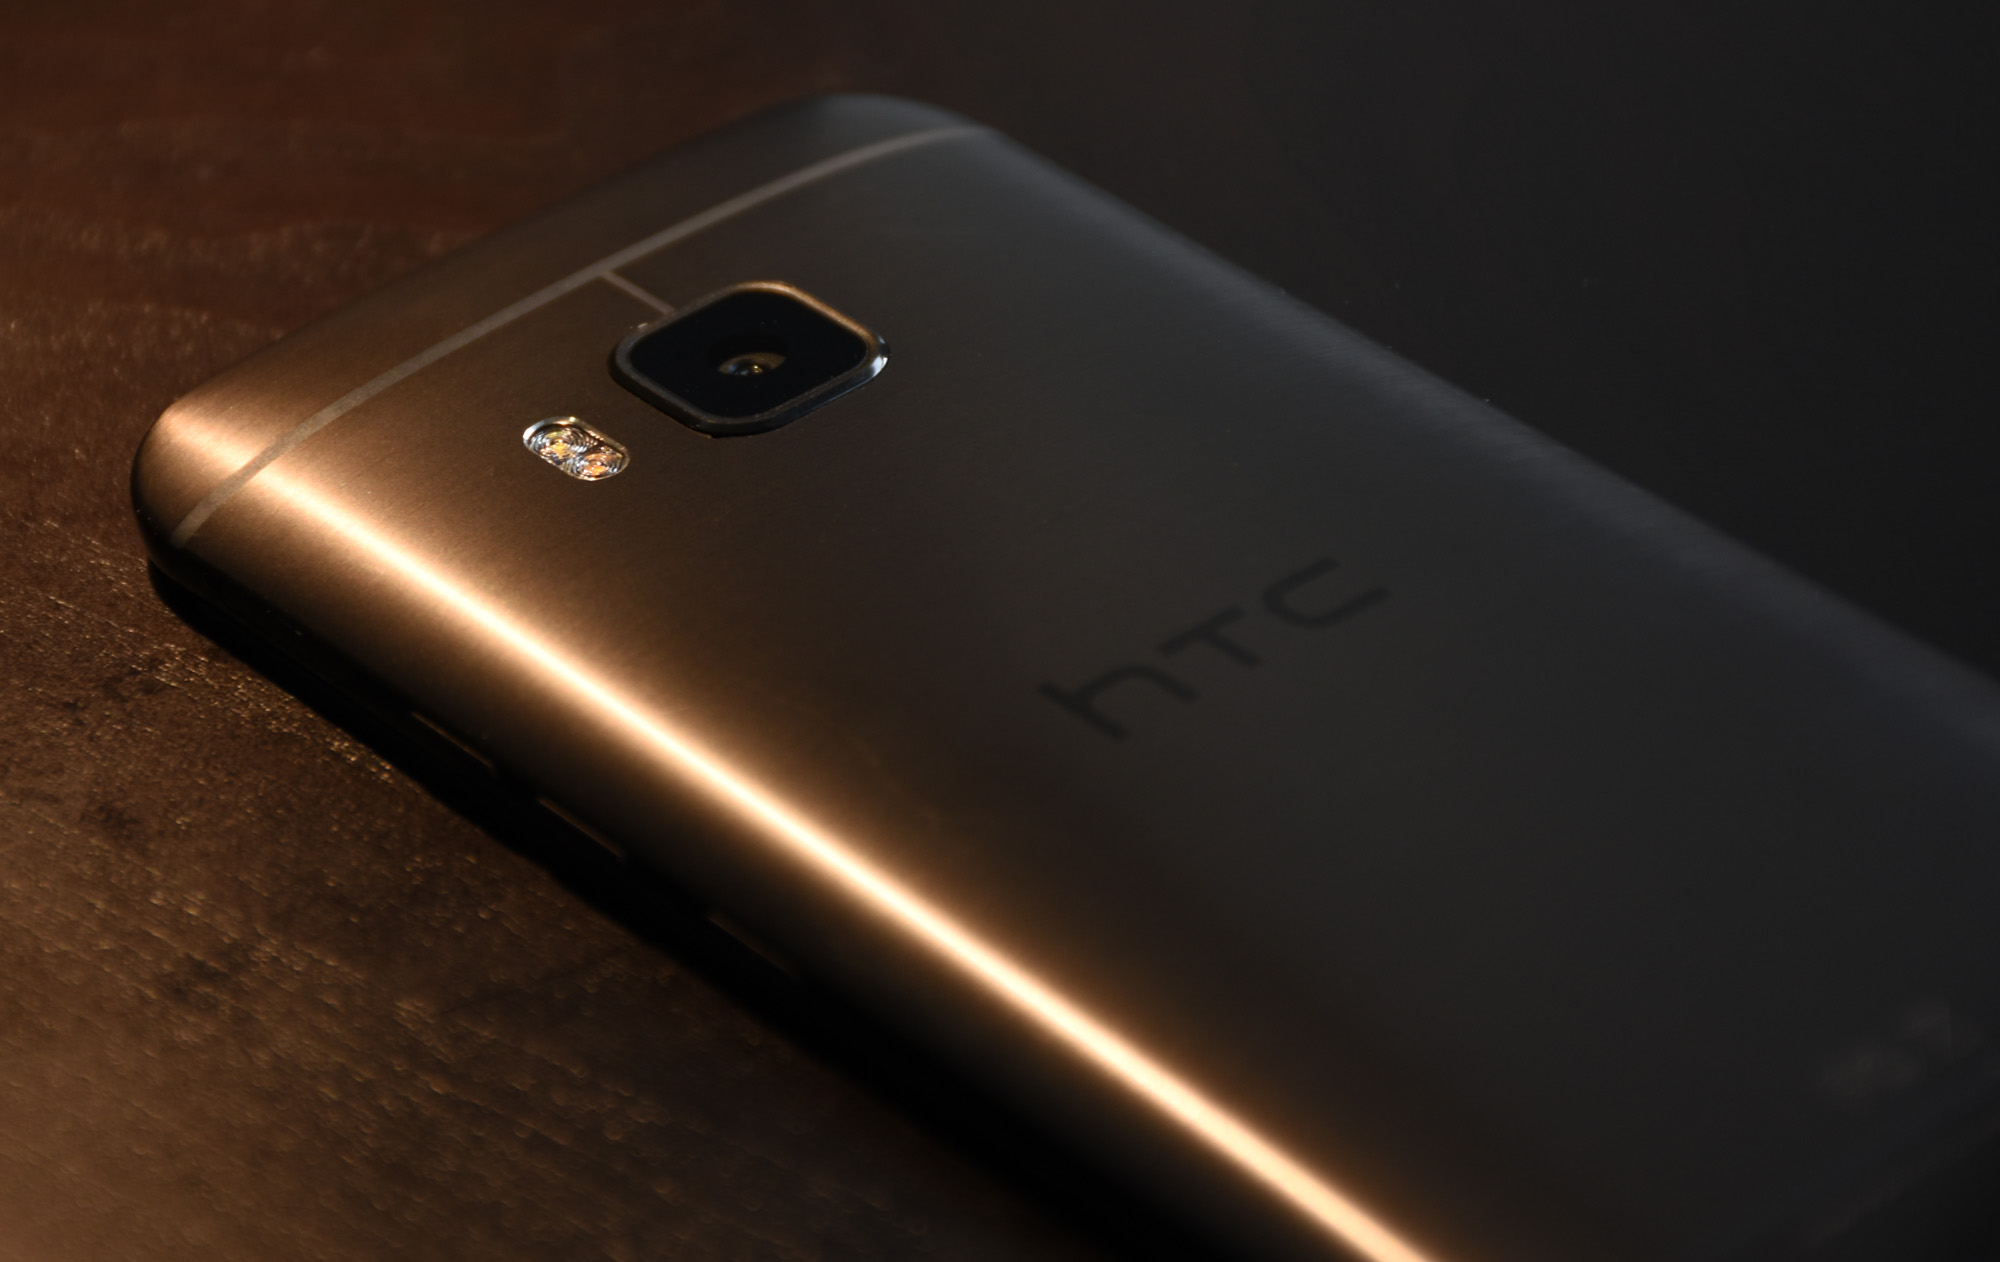 HTC One M9 laid down